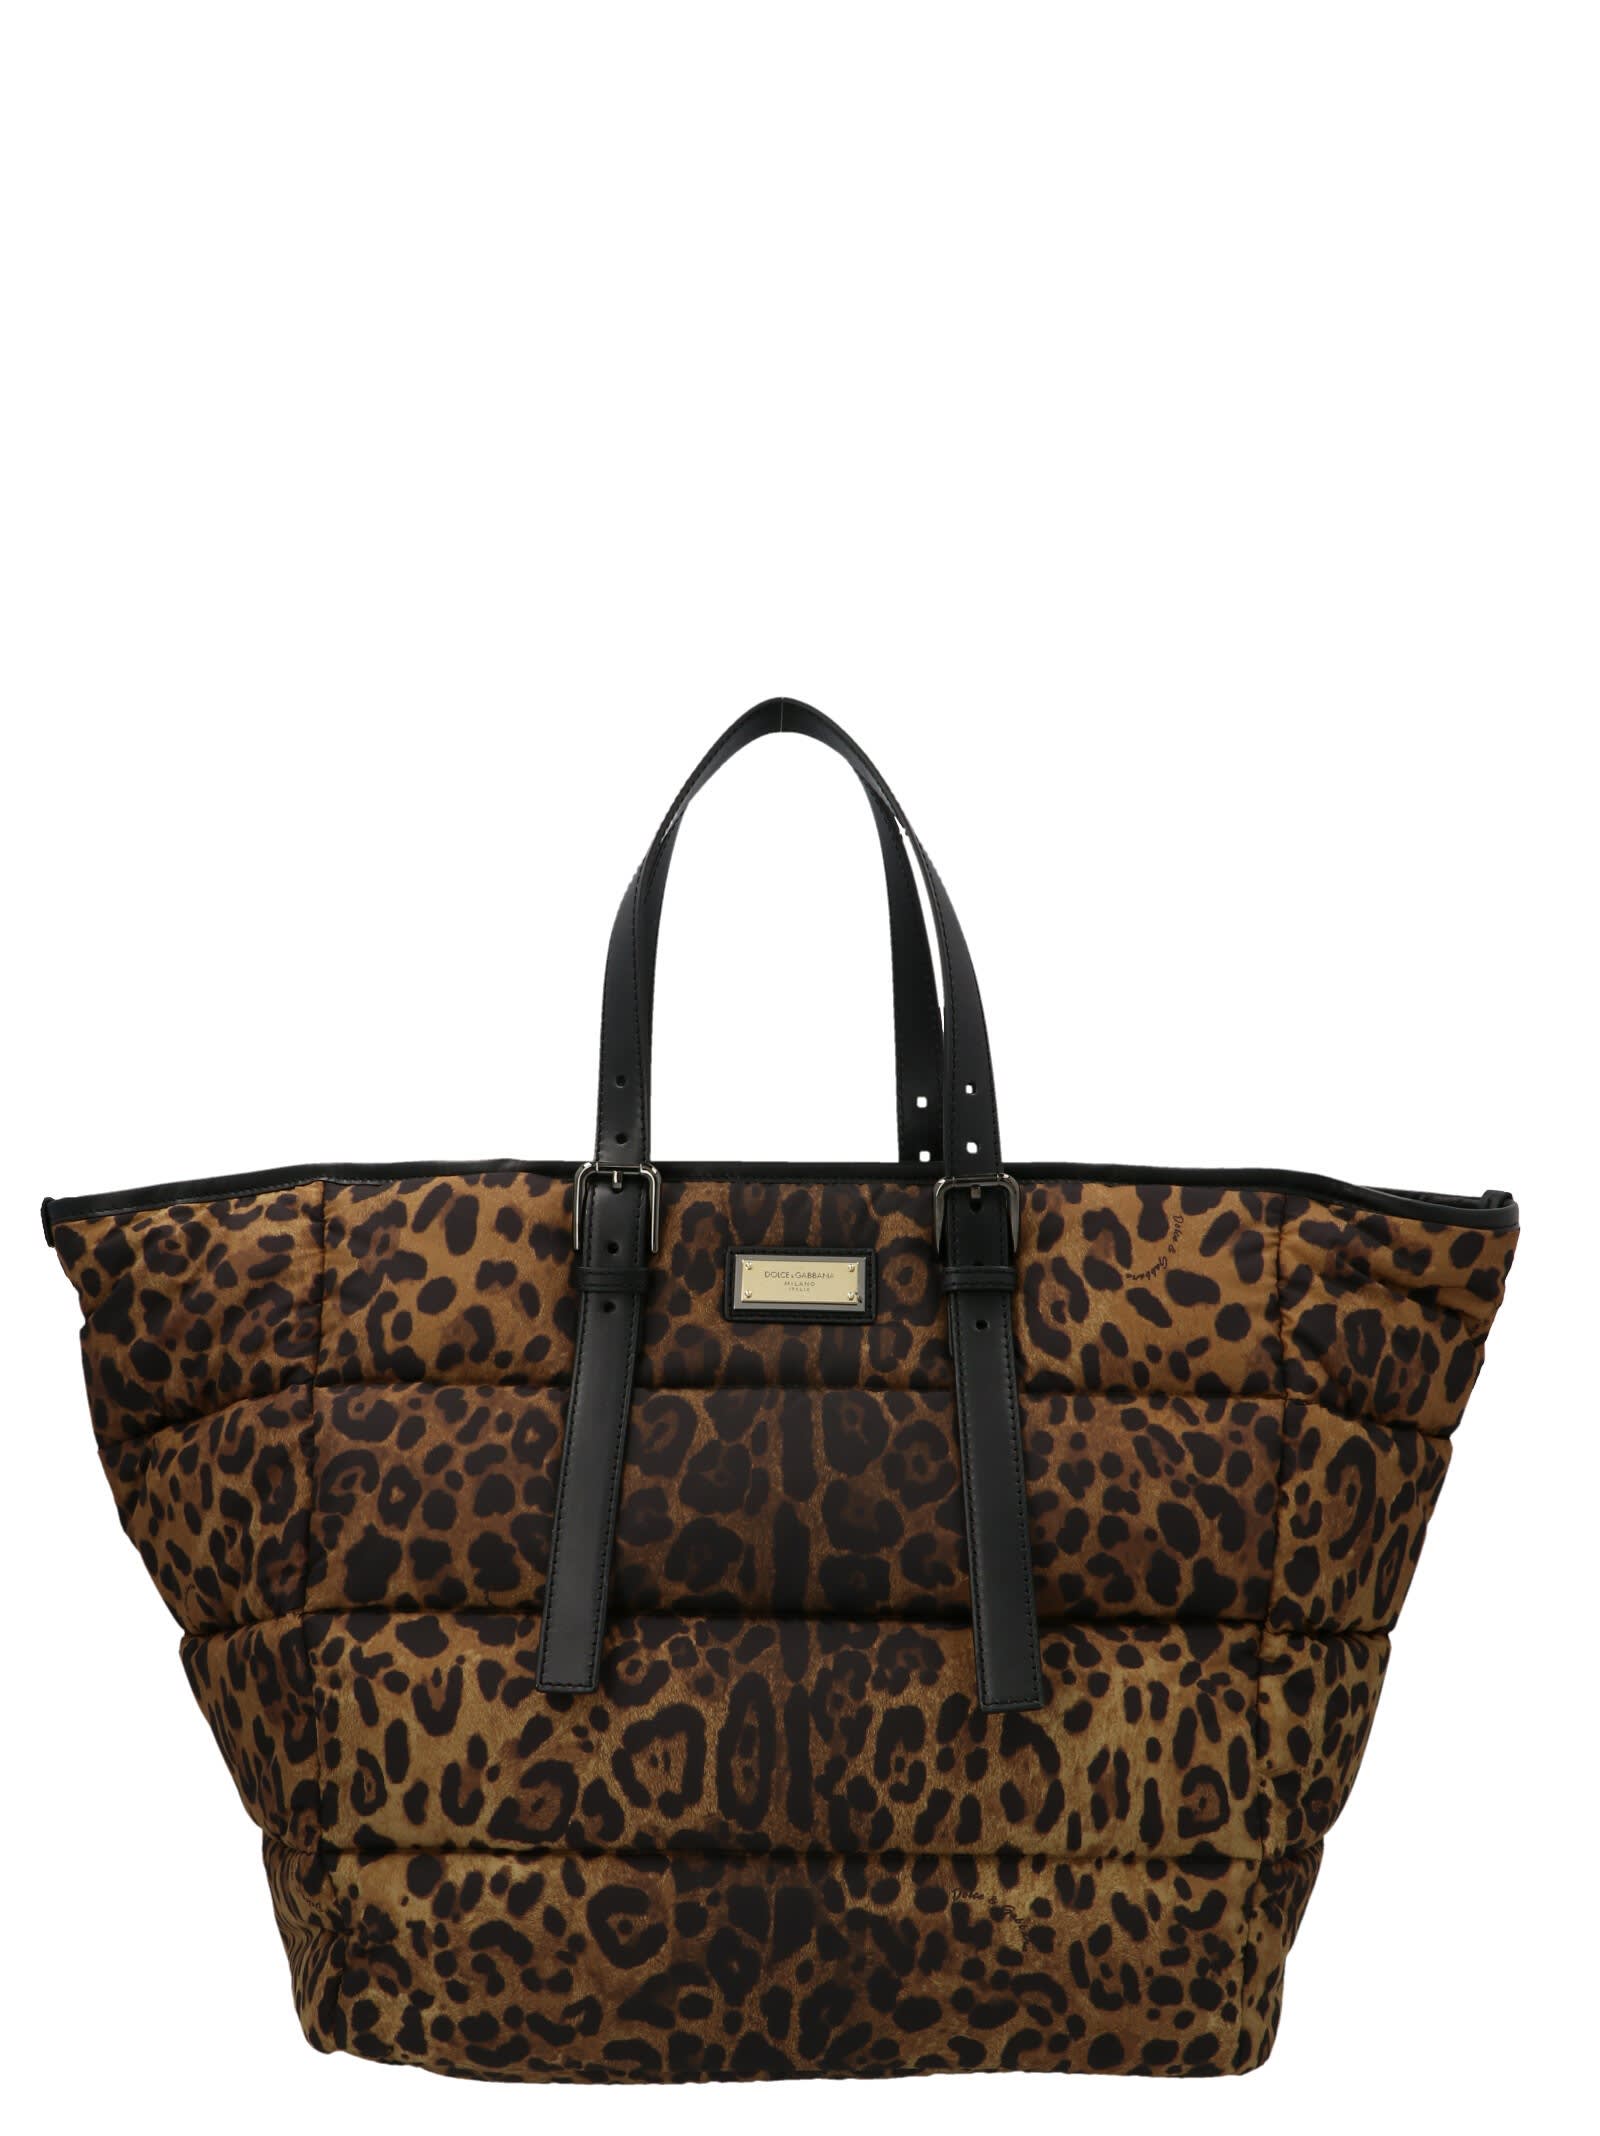 Dolce & Gabbana Animal Print Shopping Bag